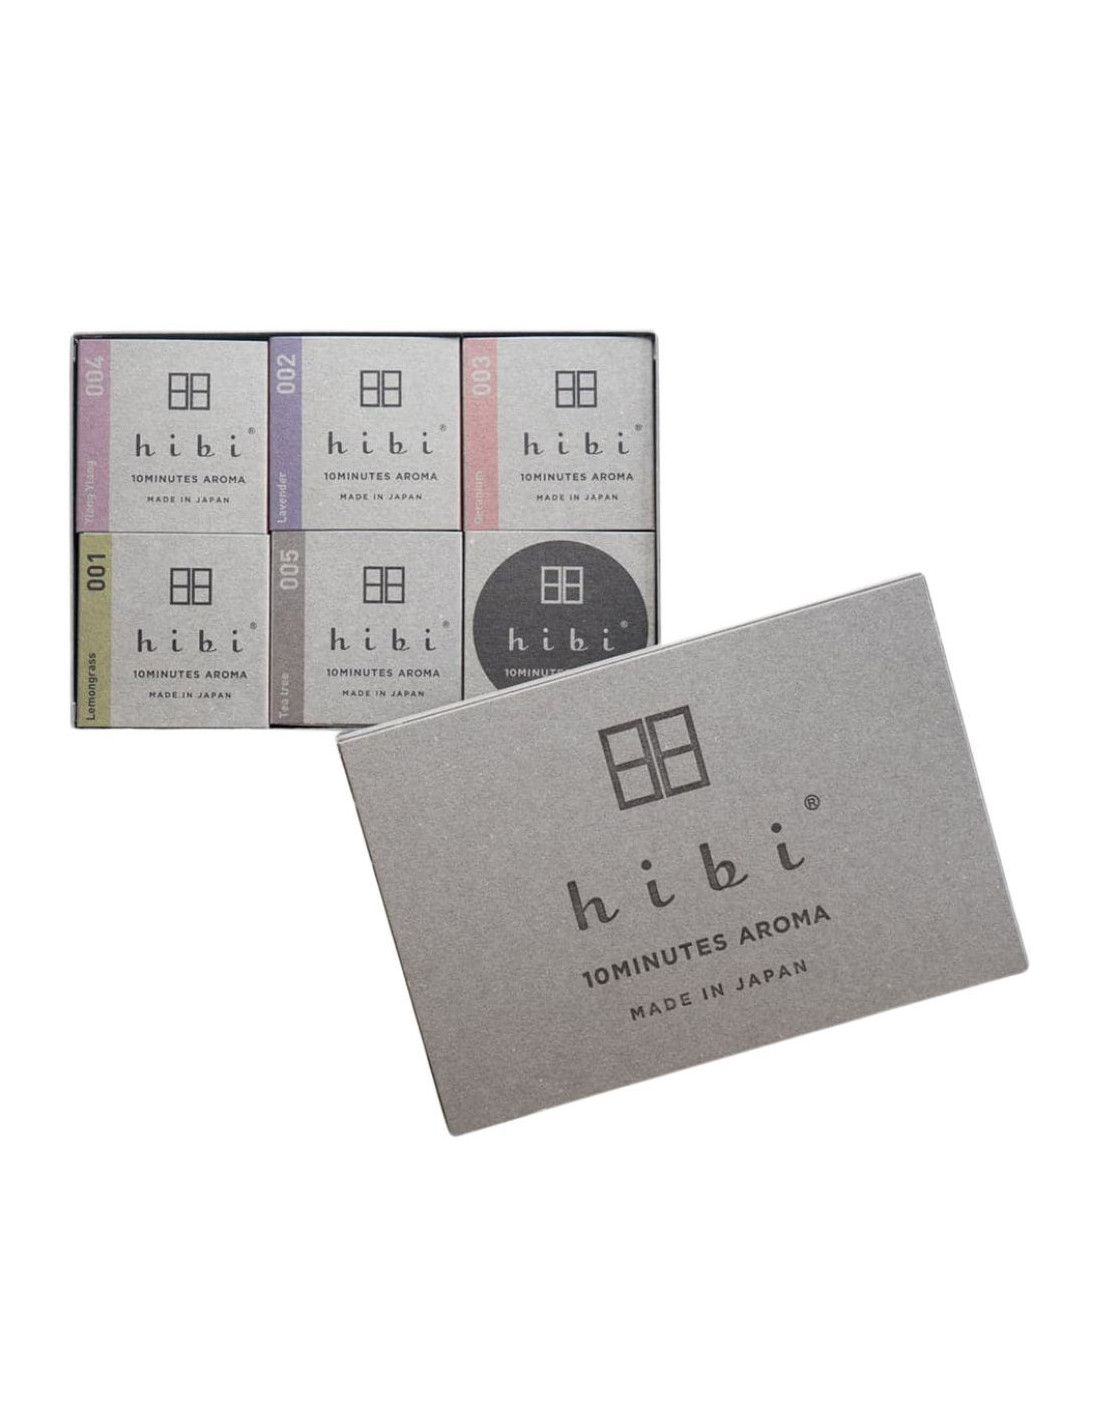 Japanese Incense sticks Gift Box - 5 Fragrances - hibi